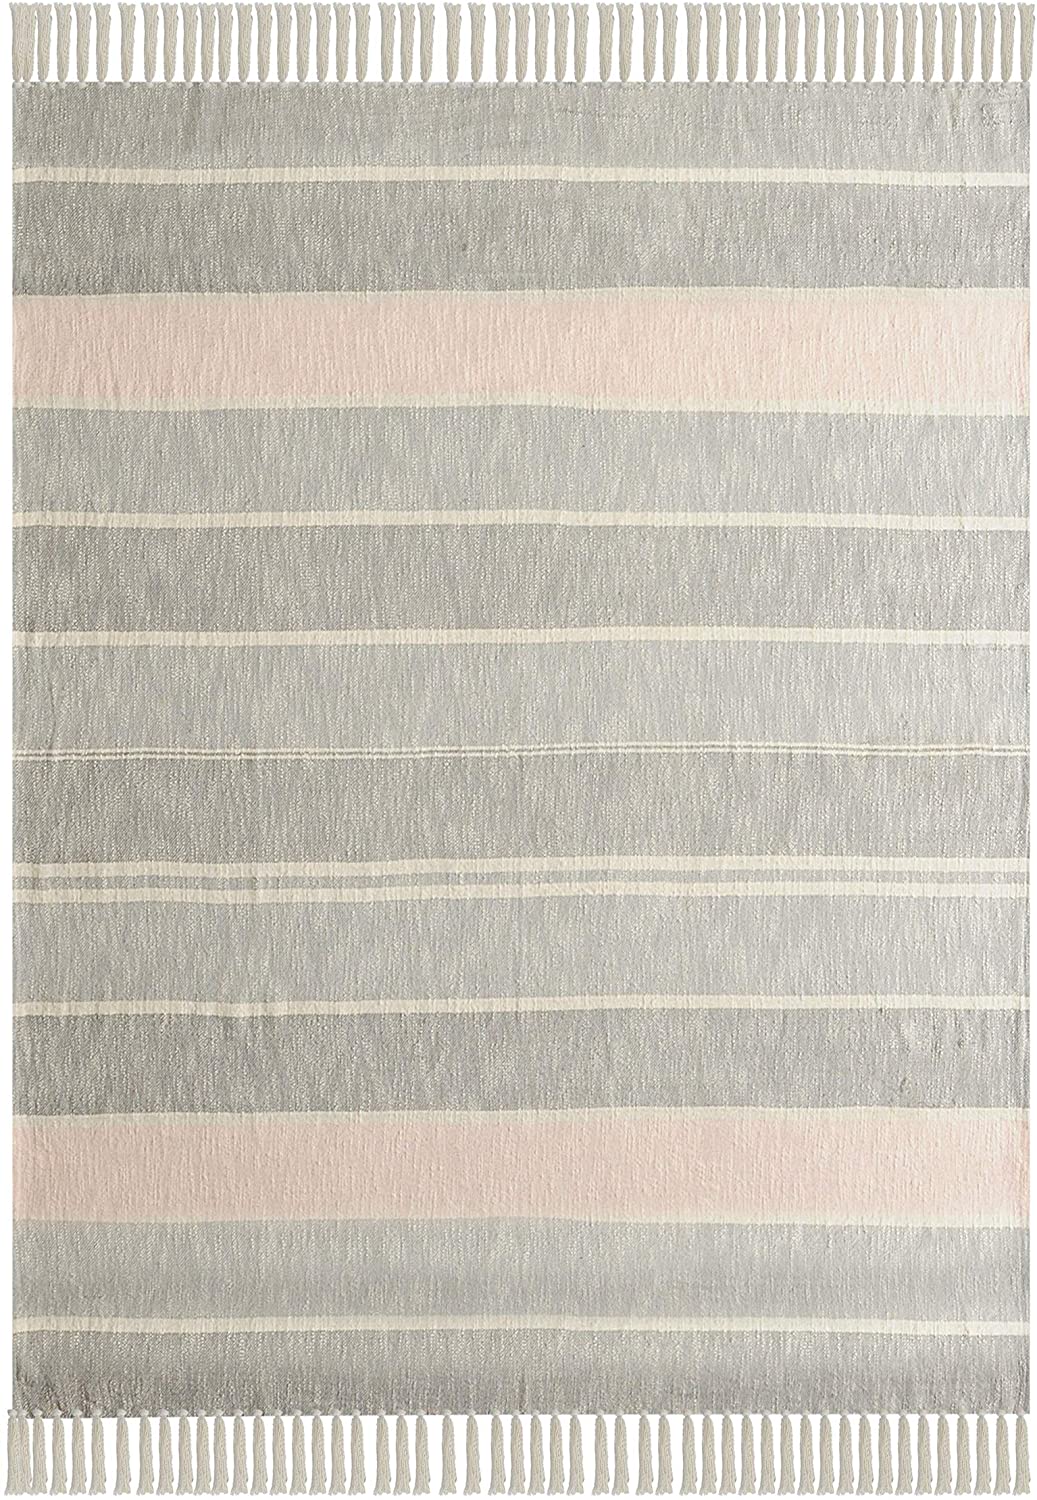 Touch Blush Striped Throw Blanket Fringe Grey Pink Geometric Farmhouse Mid Century Modern Cotton Handmade